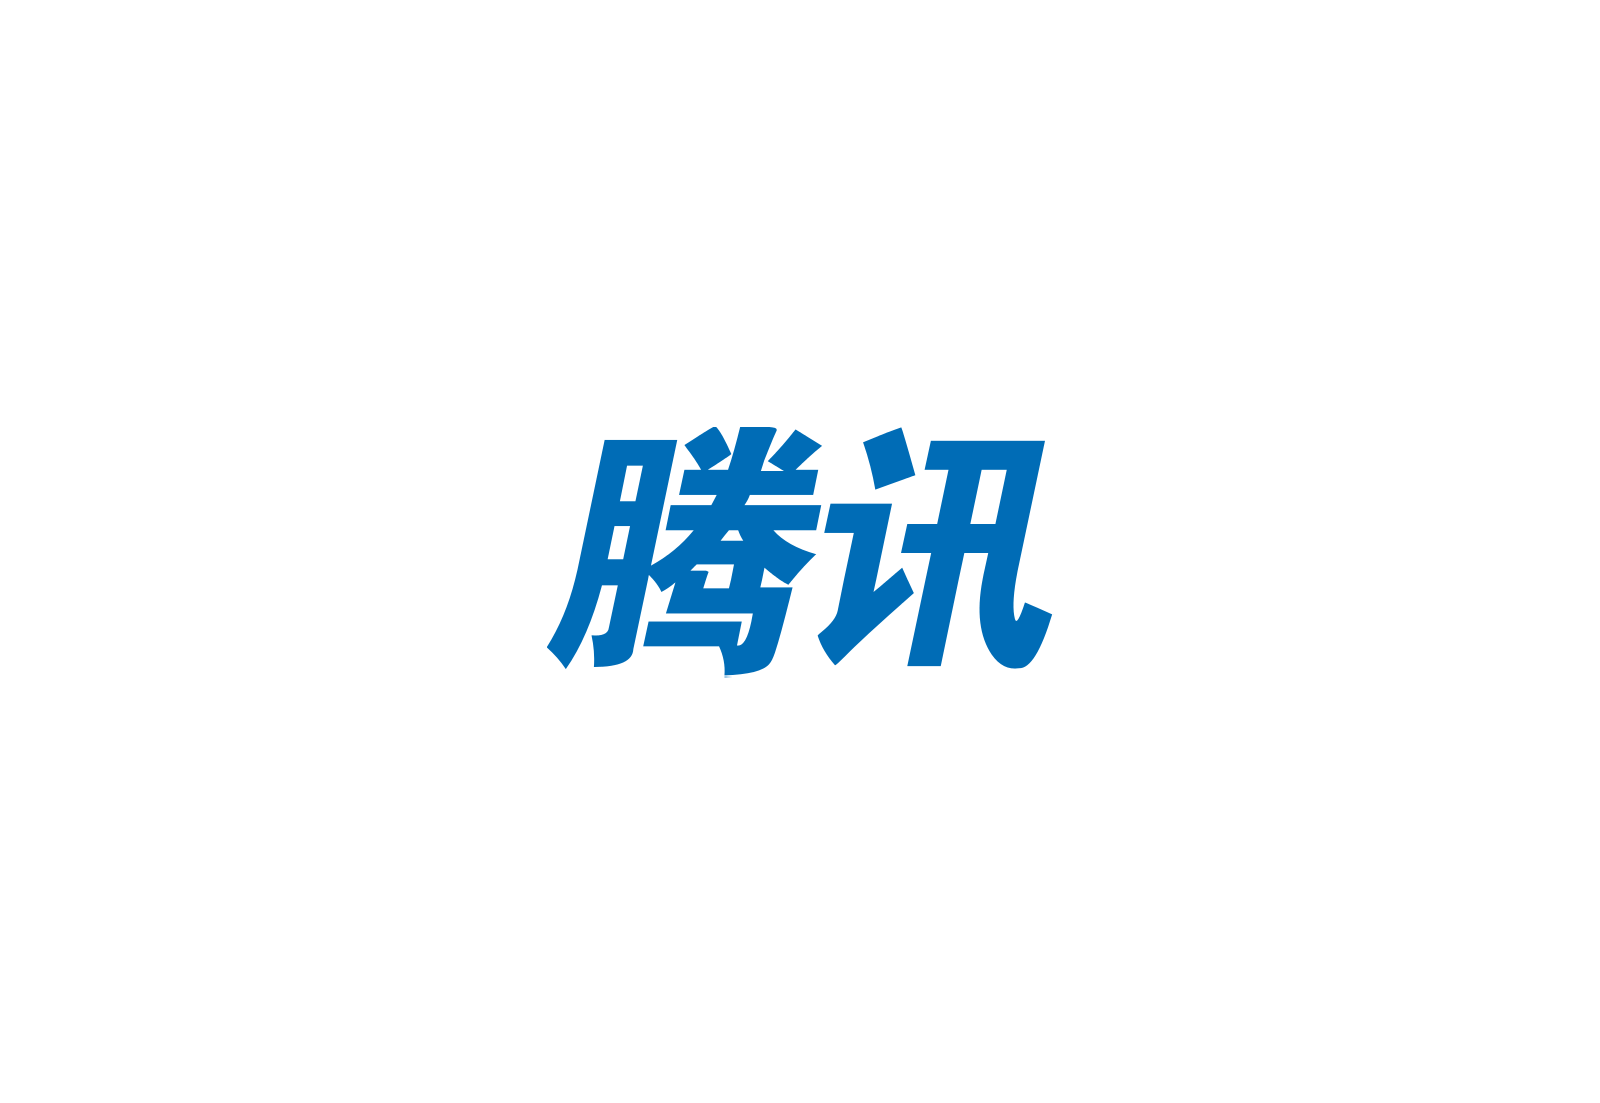 Tencent Holdings Logo - Tencent logo | Internet logo